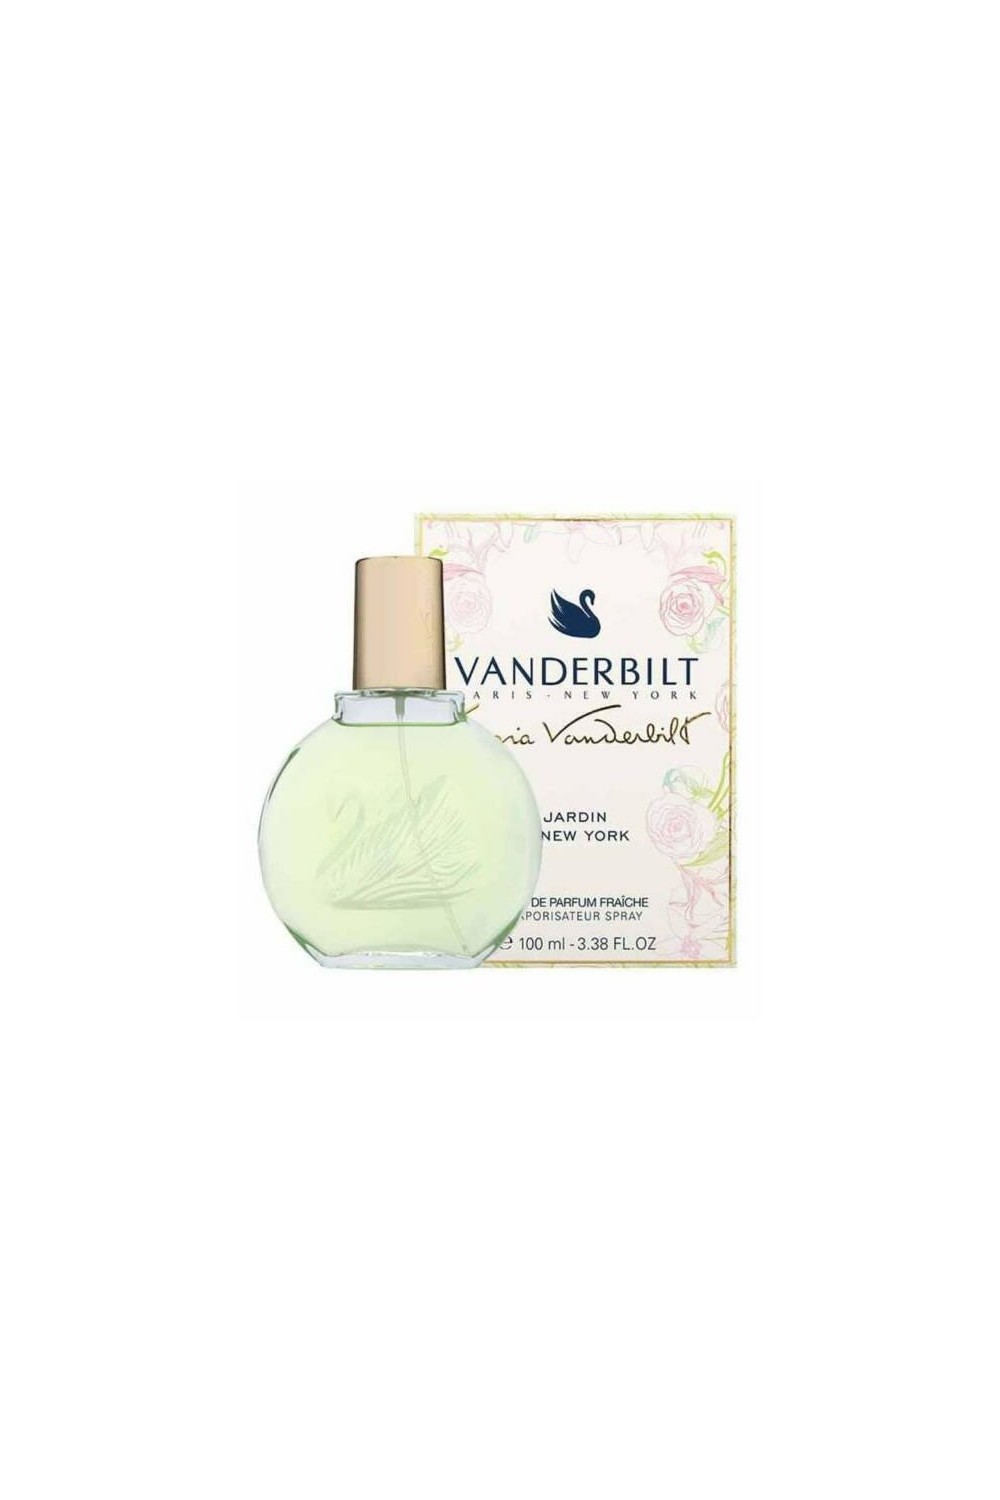 GLORIA VANDERBILT - Vanderbilt Jardin A New York Eau De Perfume Spray 100ml